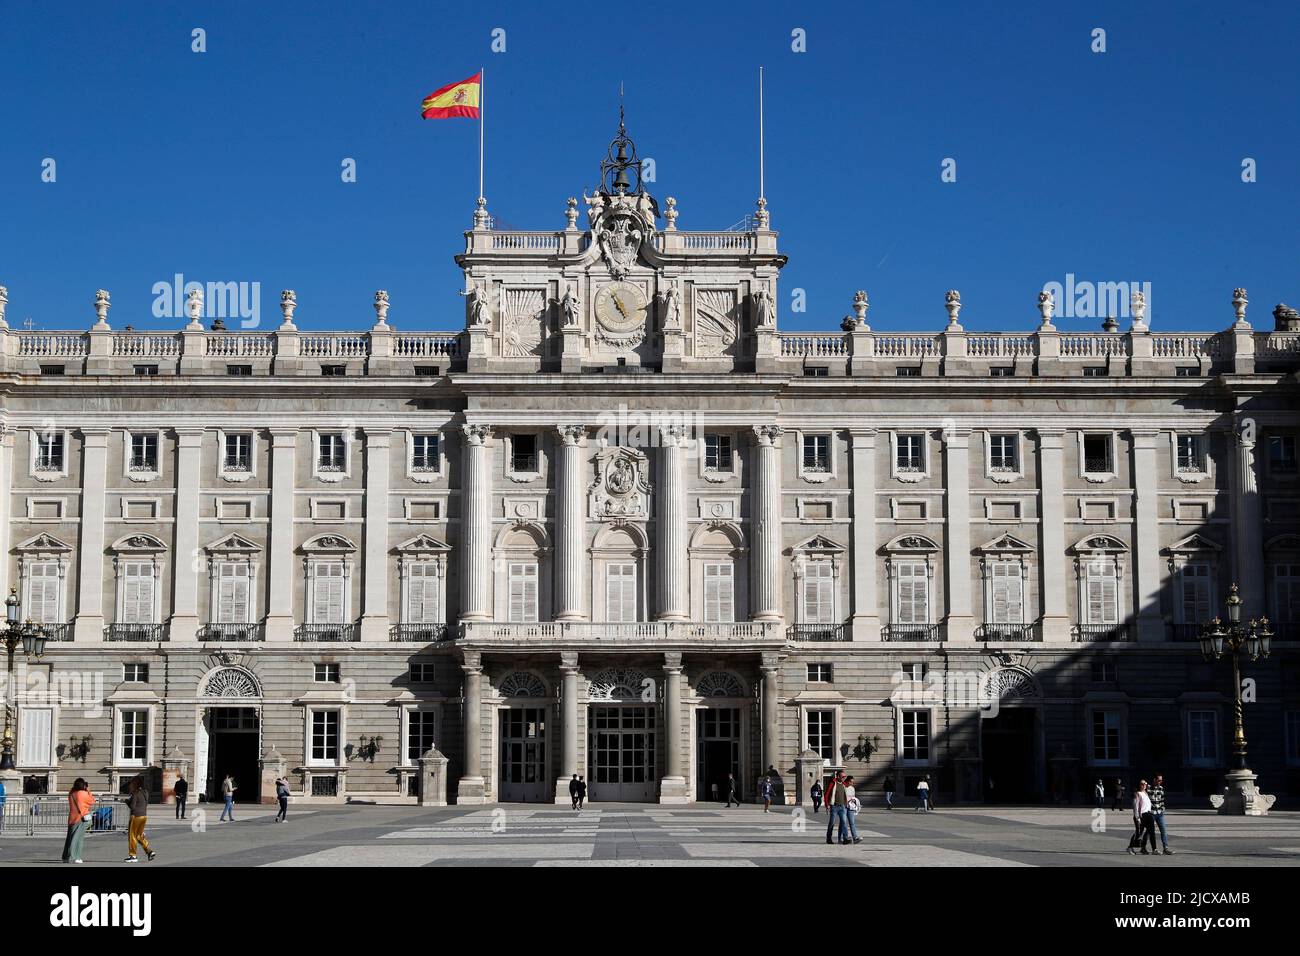 Facade of the Palacio Real (Royal Palace), Madrid, Spain, Europe Stock Photo